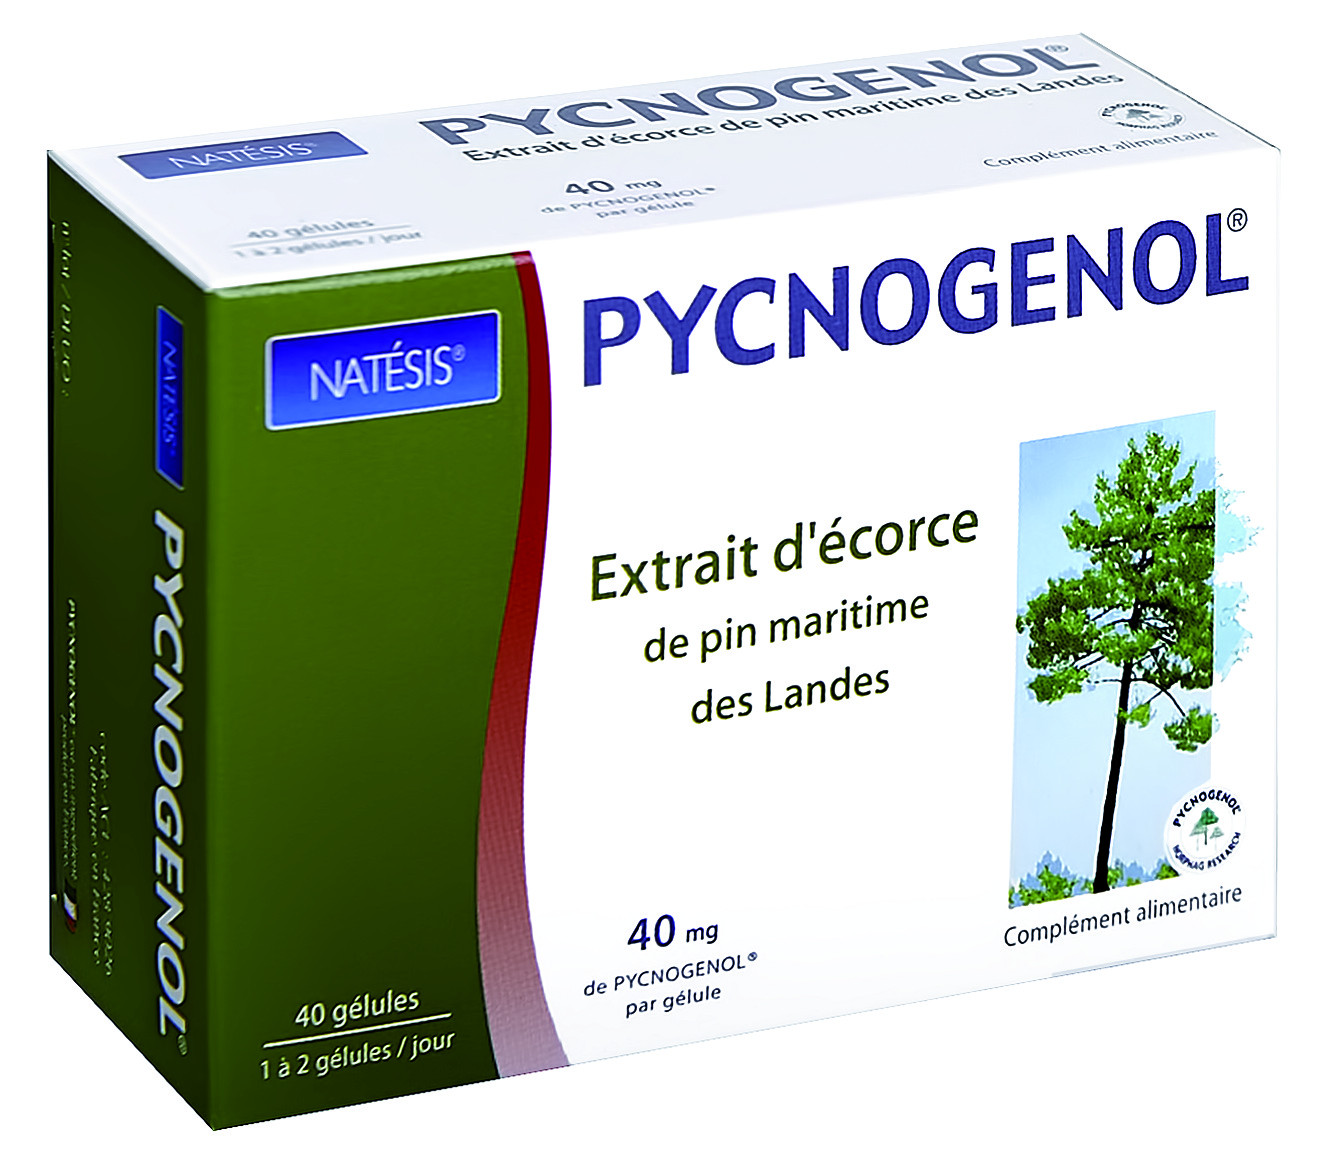 Natesis-Pycnogenol-antioxydant-pin-des-landes-bio-info